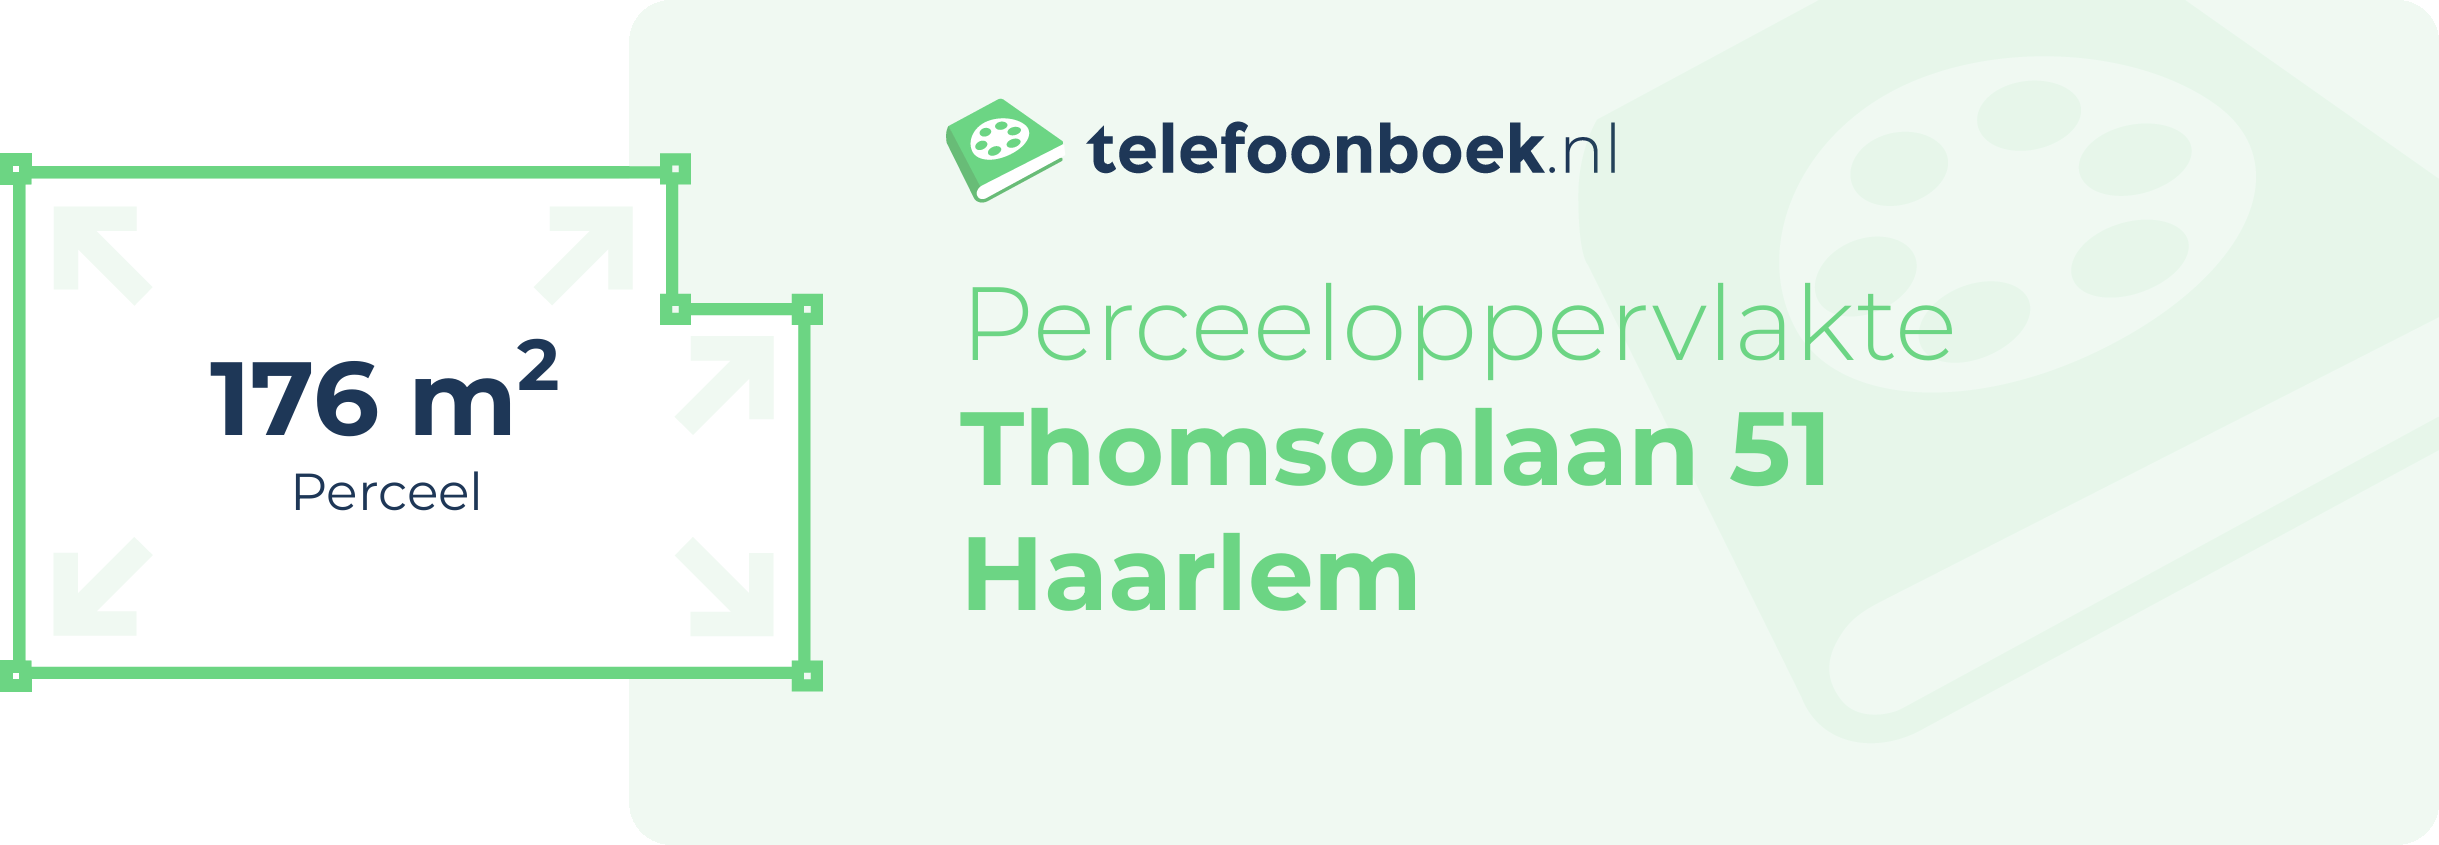 Perceeloppervlakte Thomsonlaan 51 Haarlem